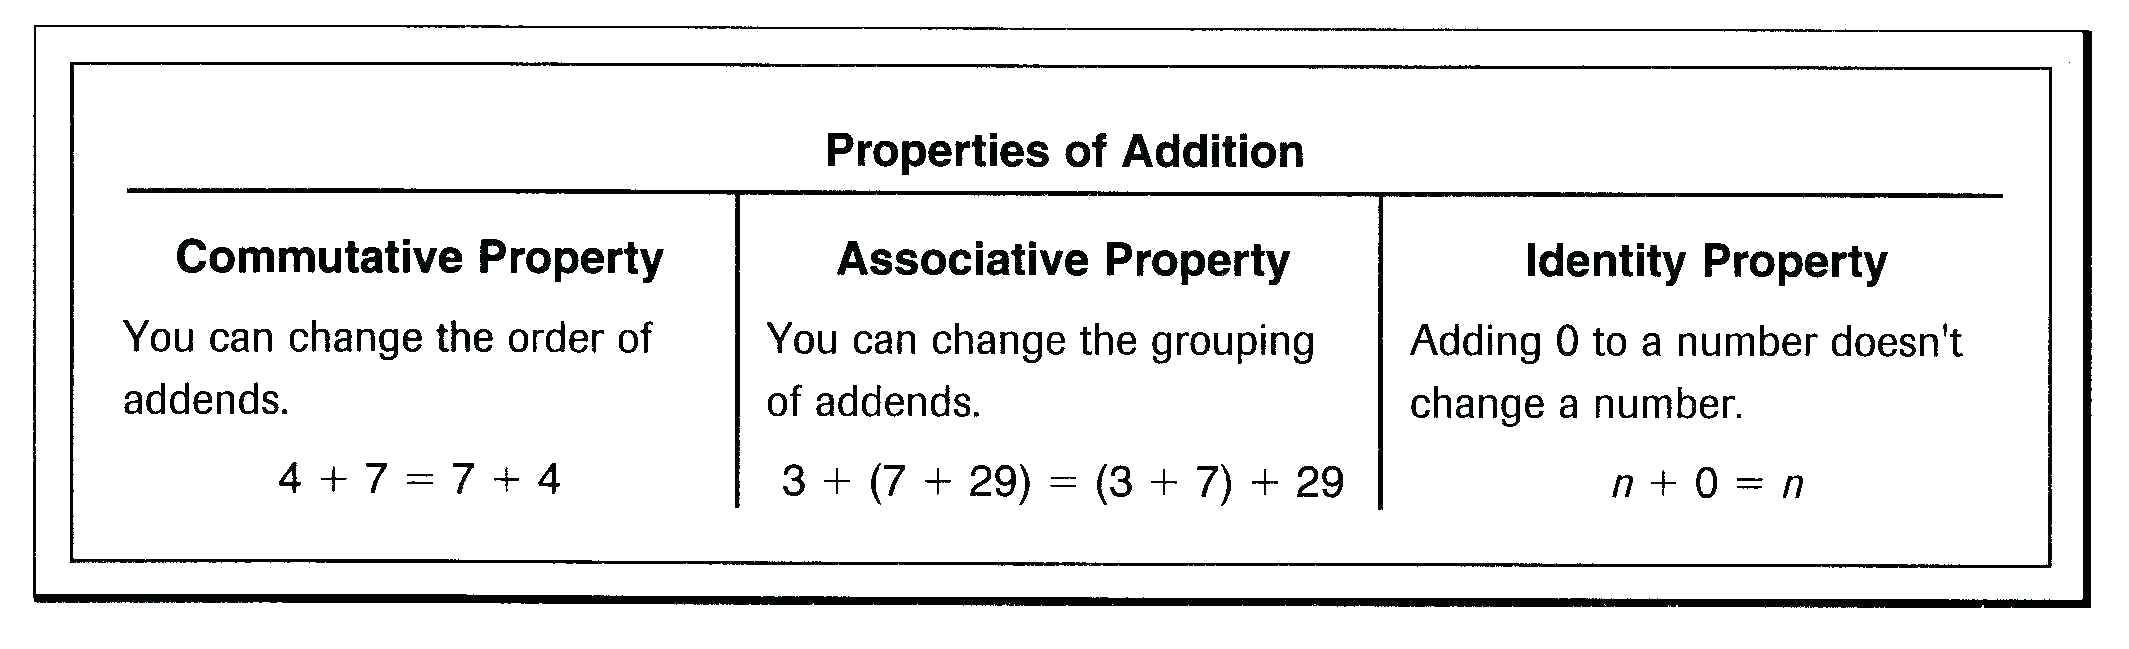 associative-property-of-addition-worksheets-3rd-grade-db-excel